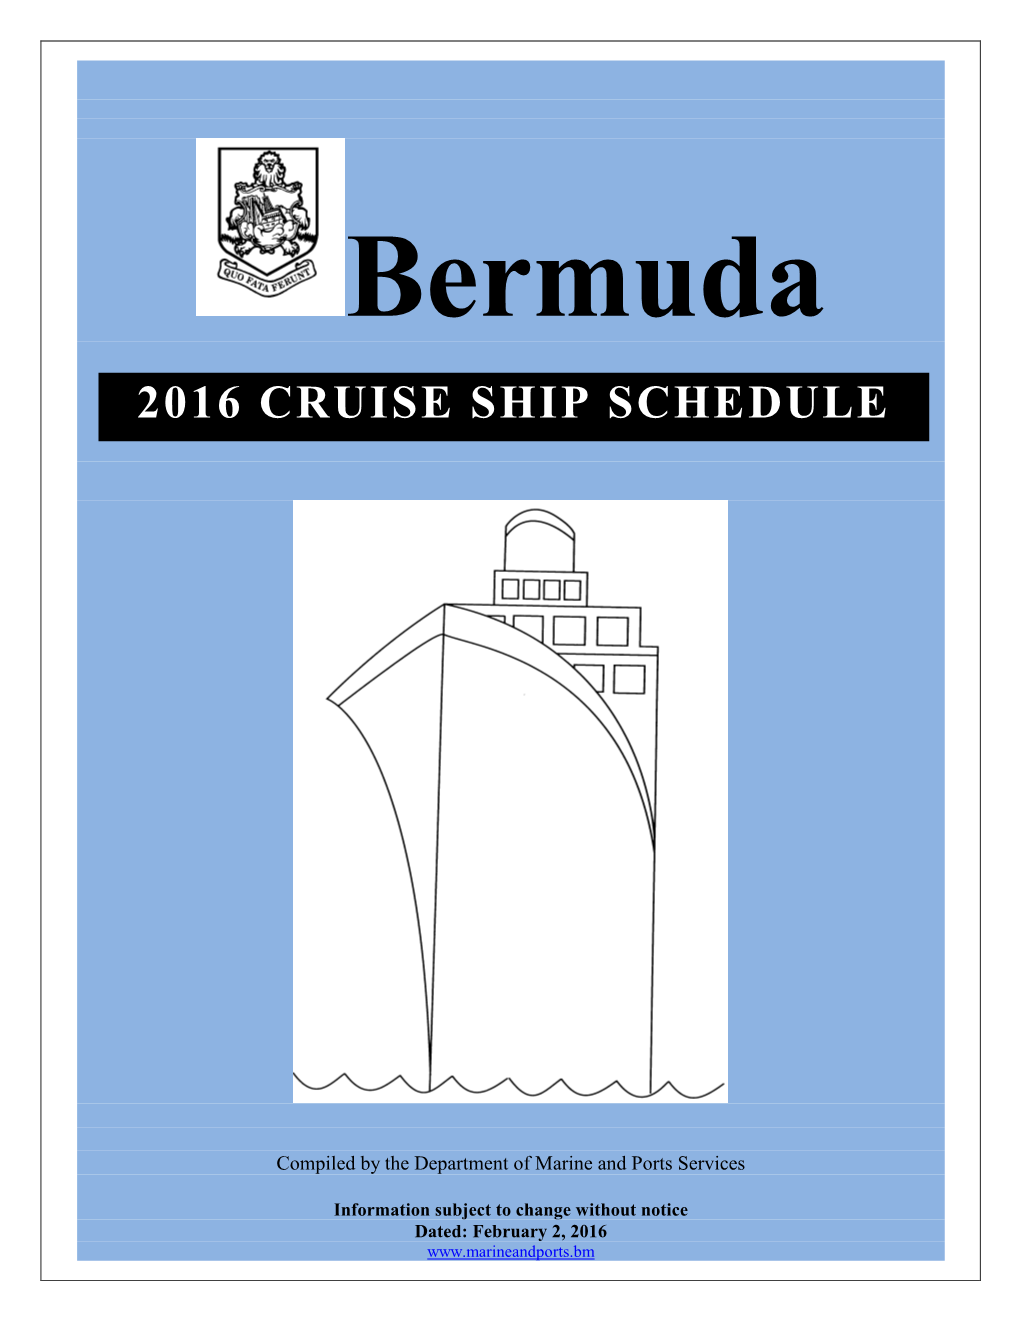 2016 Cruise Ship Schedule